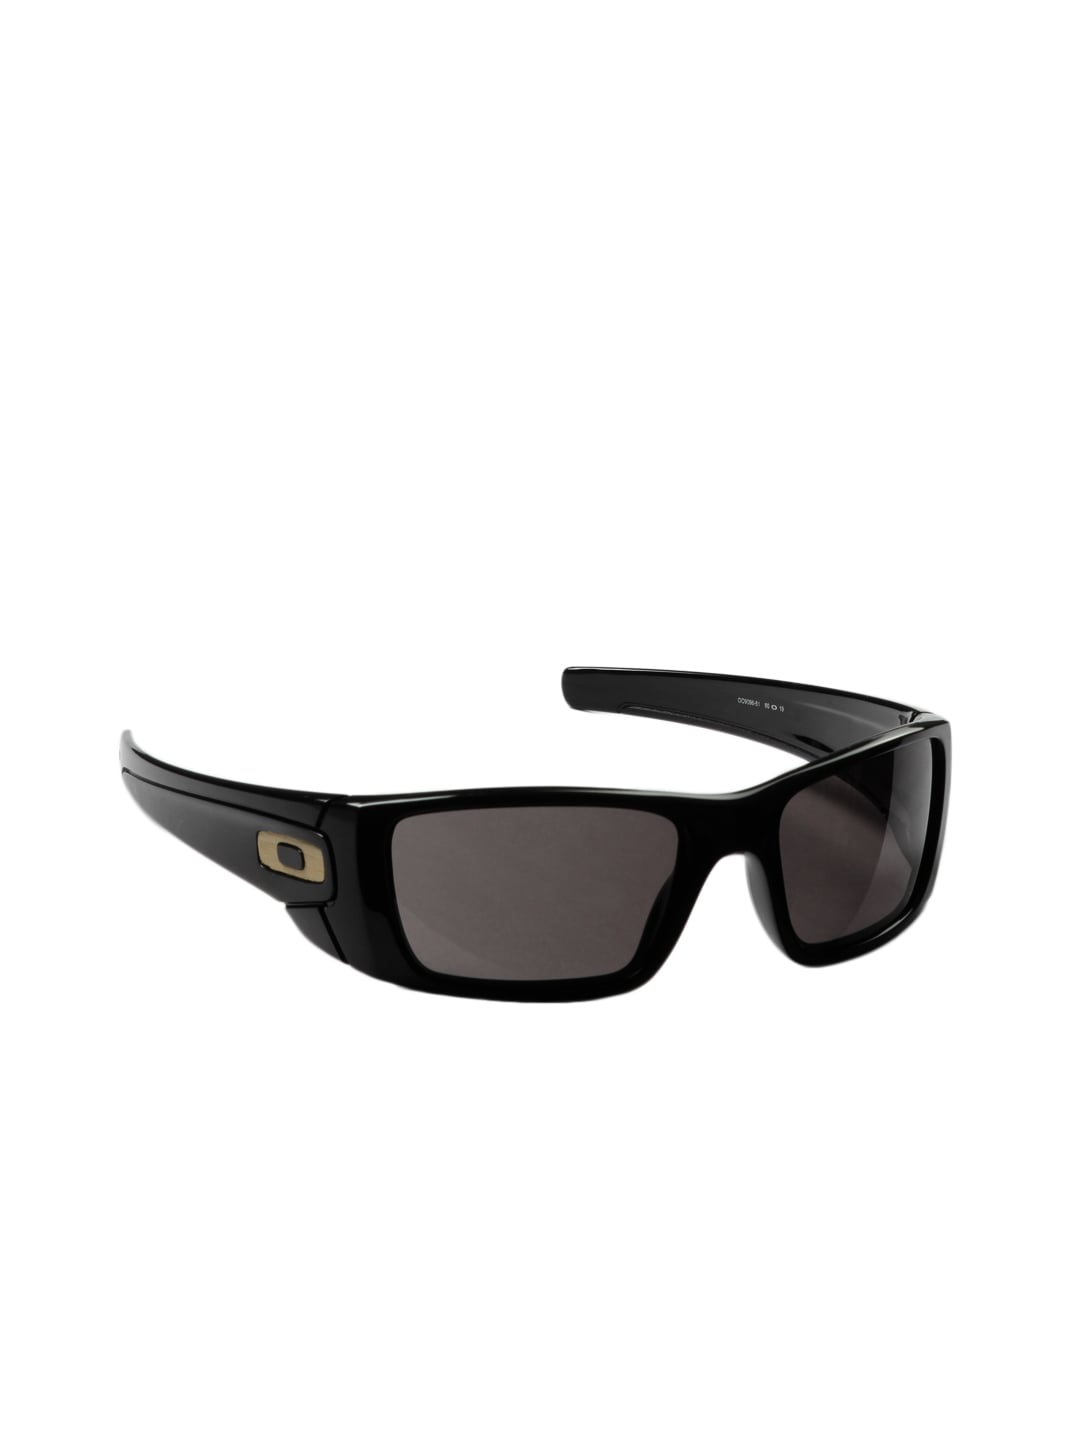 Oakley Men Fuel Cell Black Sunglasses